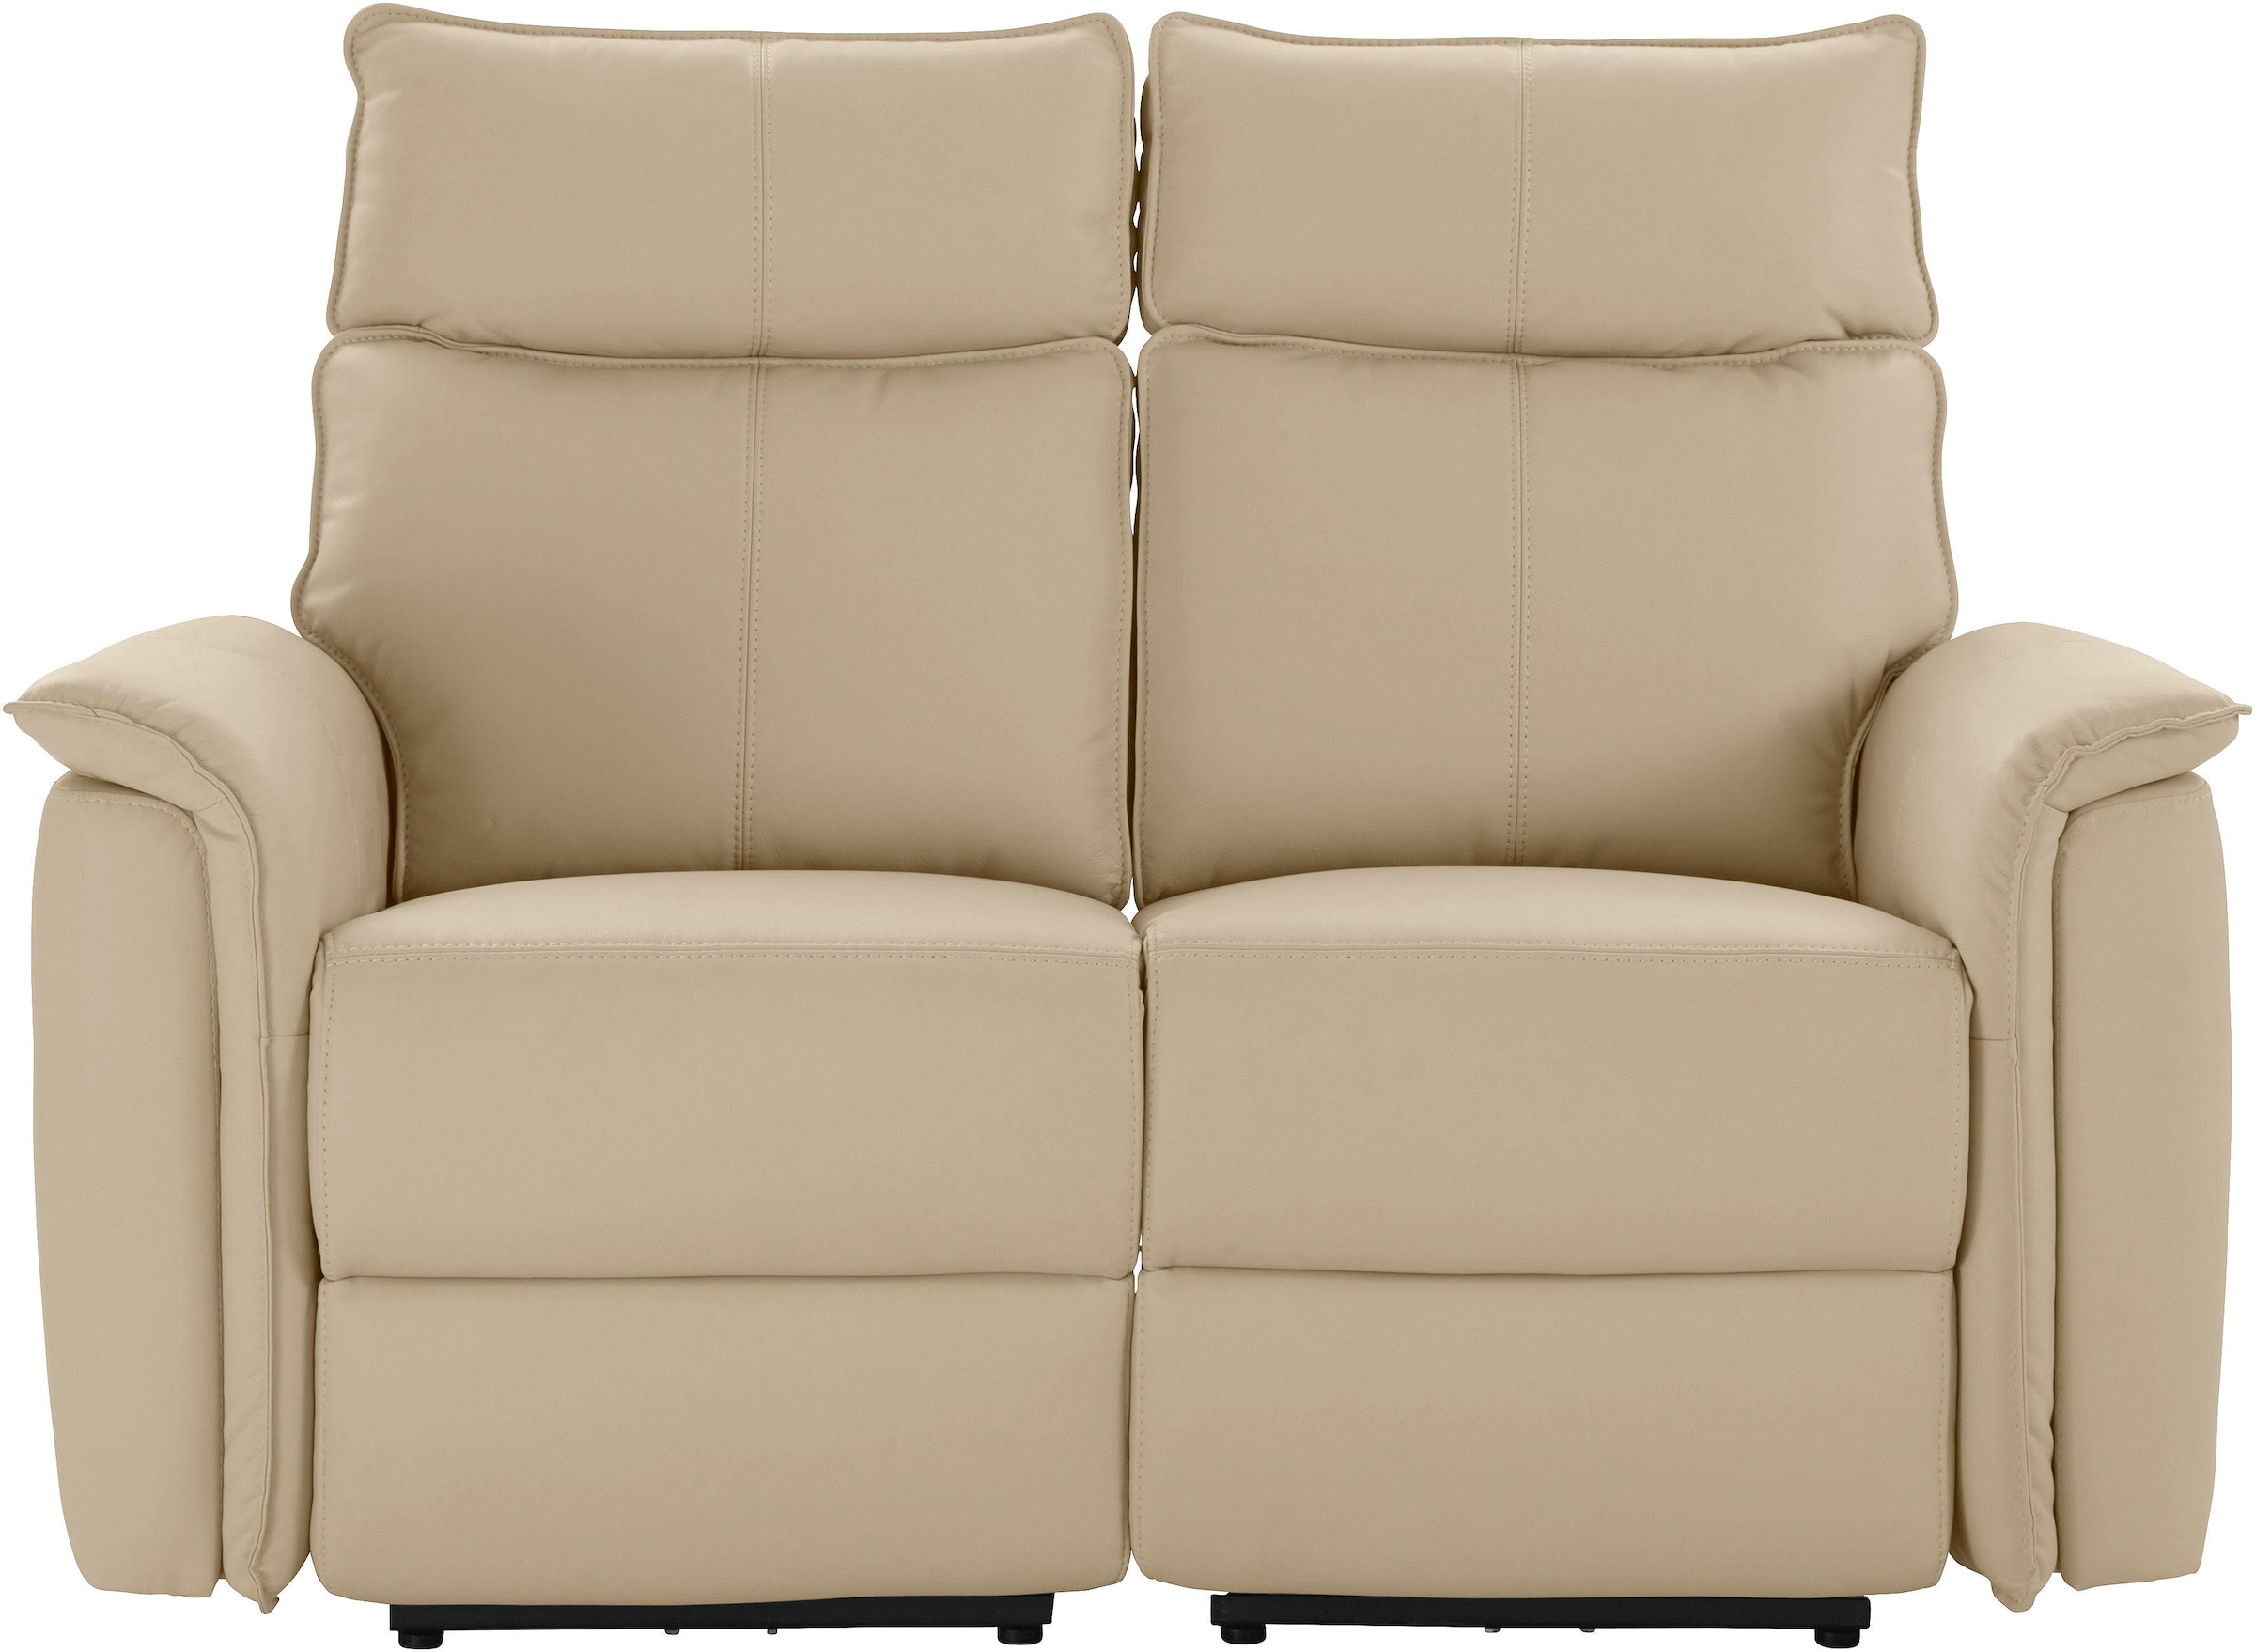 Places of Style 2-Sitzer »Zola«, Sitzkomfort durch elektrische Relaxfunktion, USB-Anschluss, 142 cm